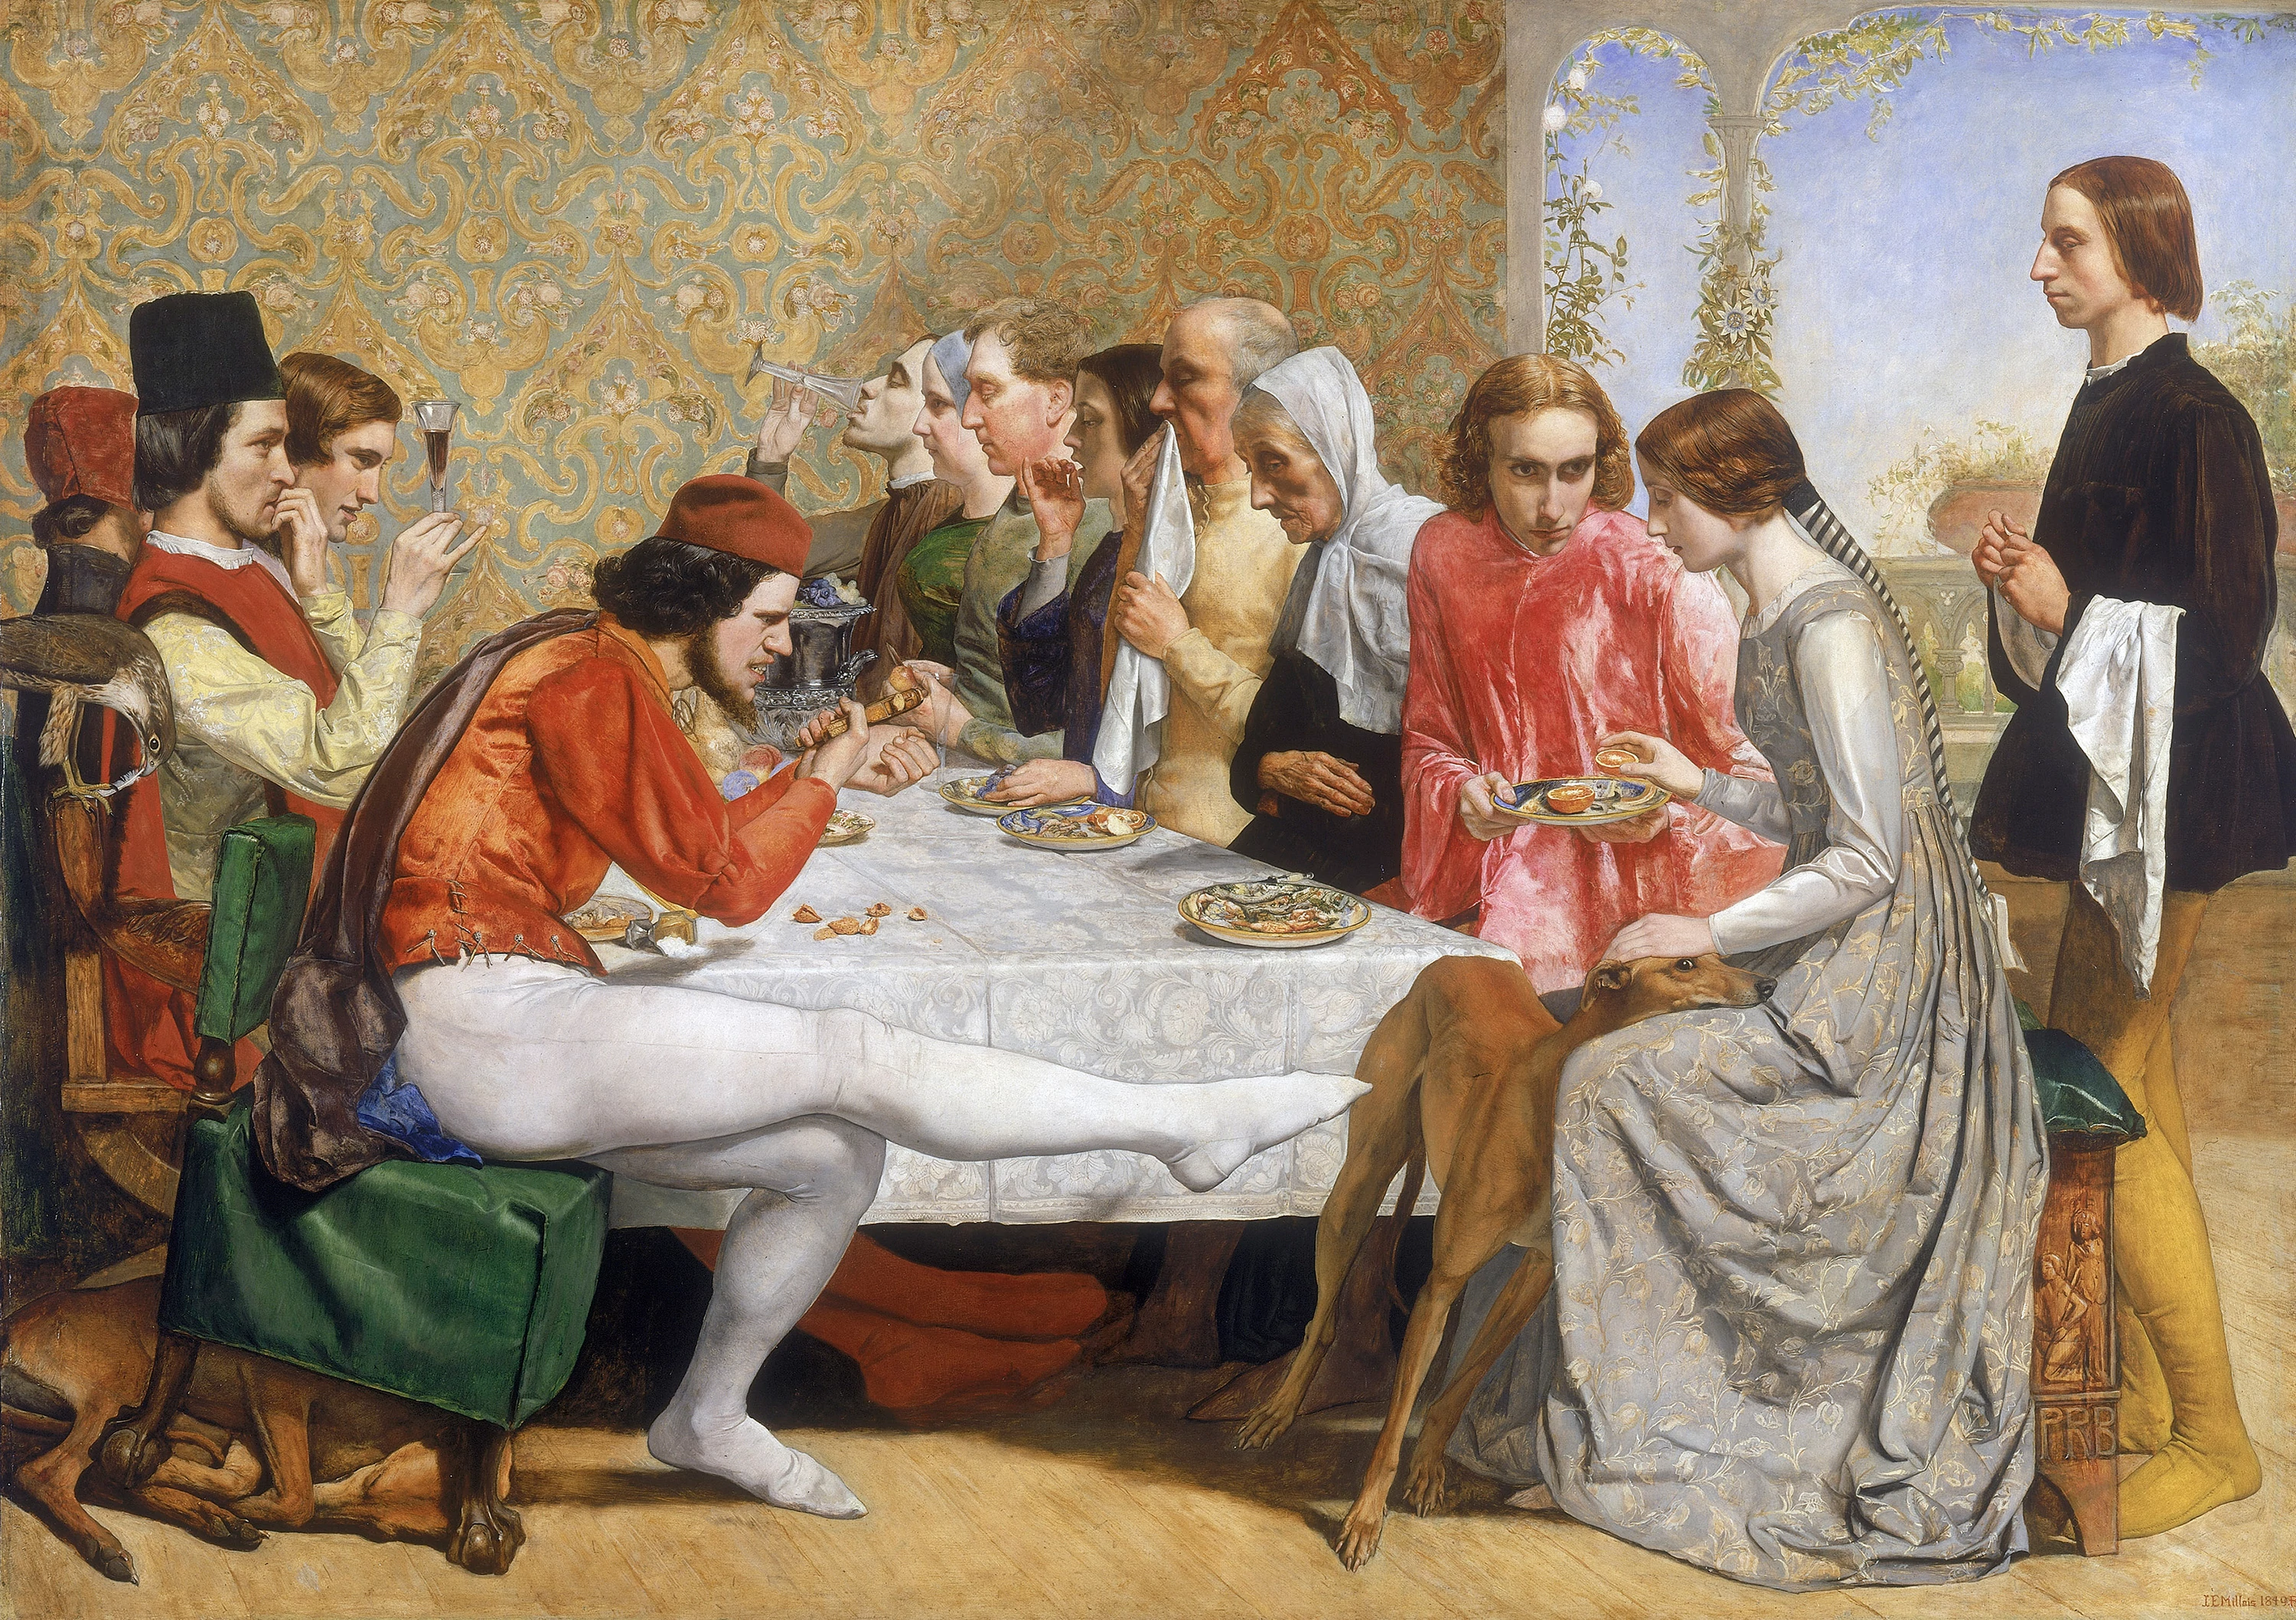 Isabella, John Everett Millais